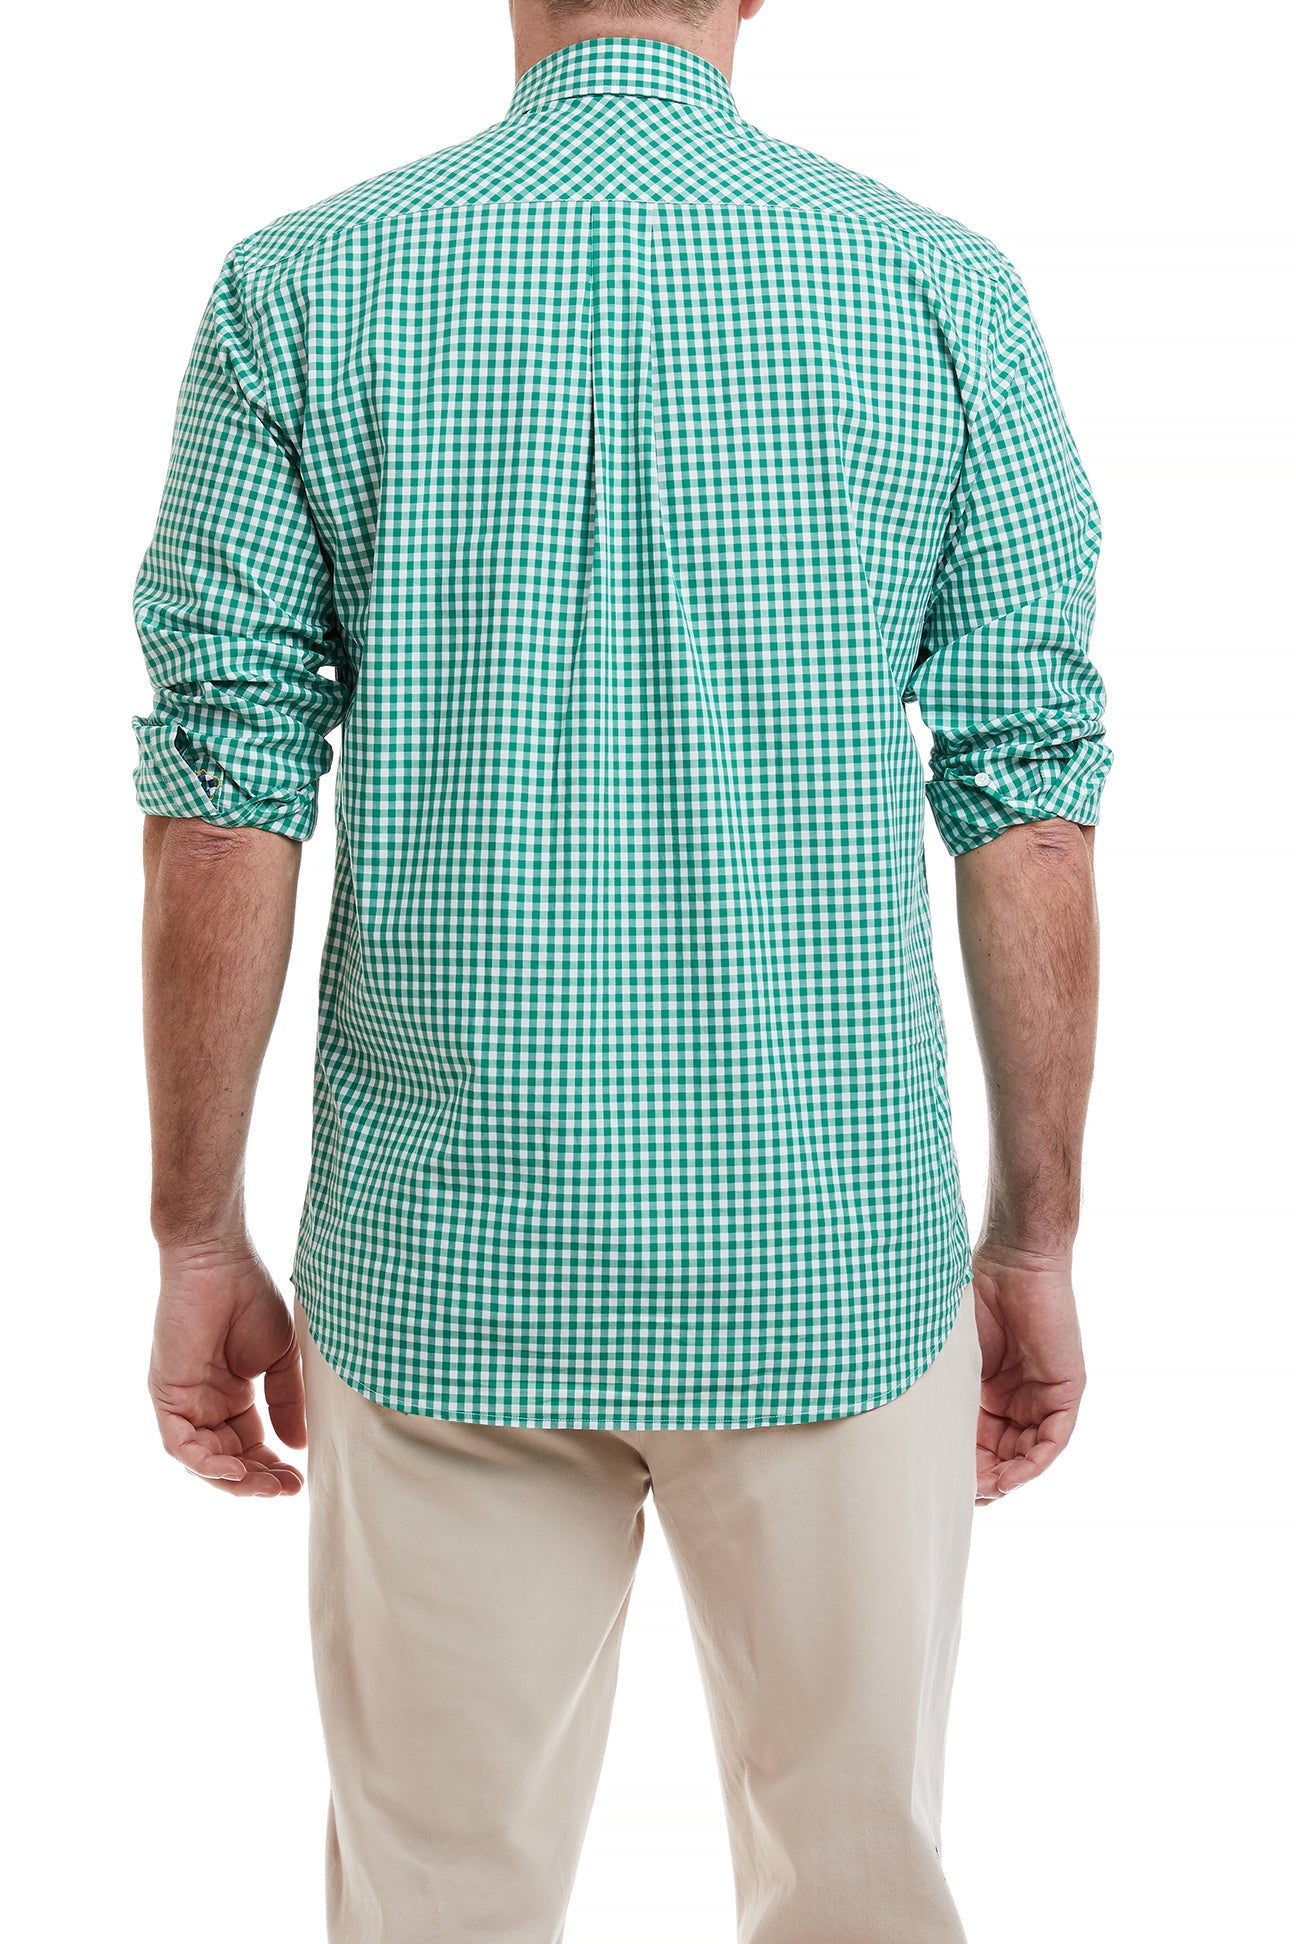 Chase Shirt Wide Gingham Green with Single Shamrock MENS SPORT SHIRTS Castaway Nantucket Island